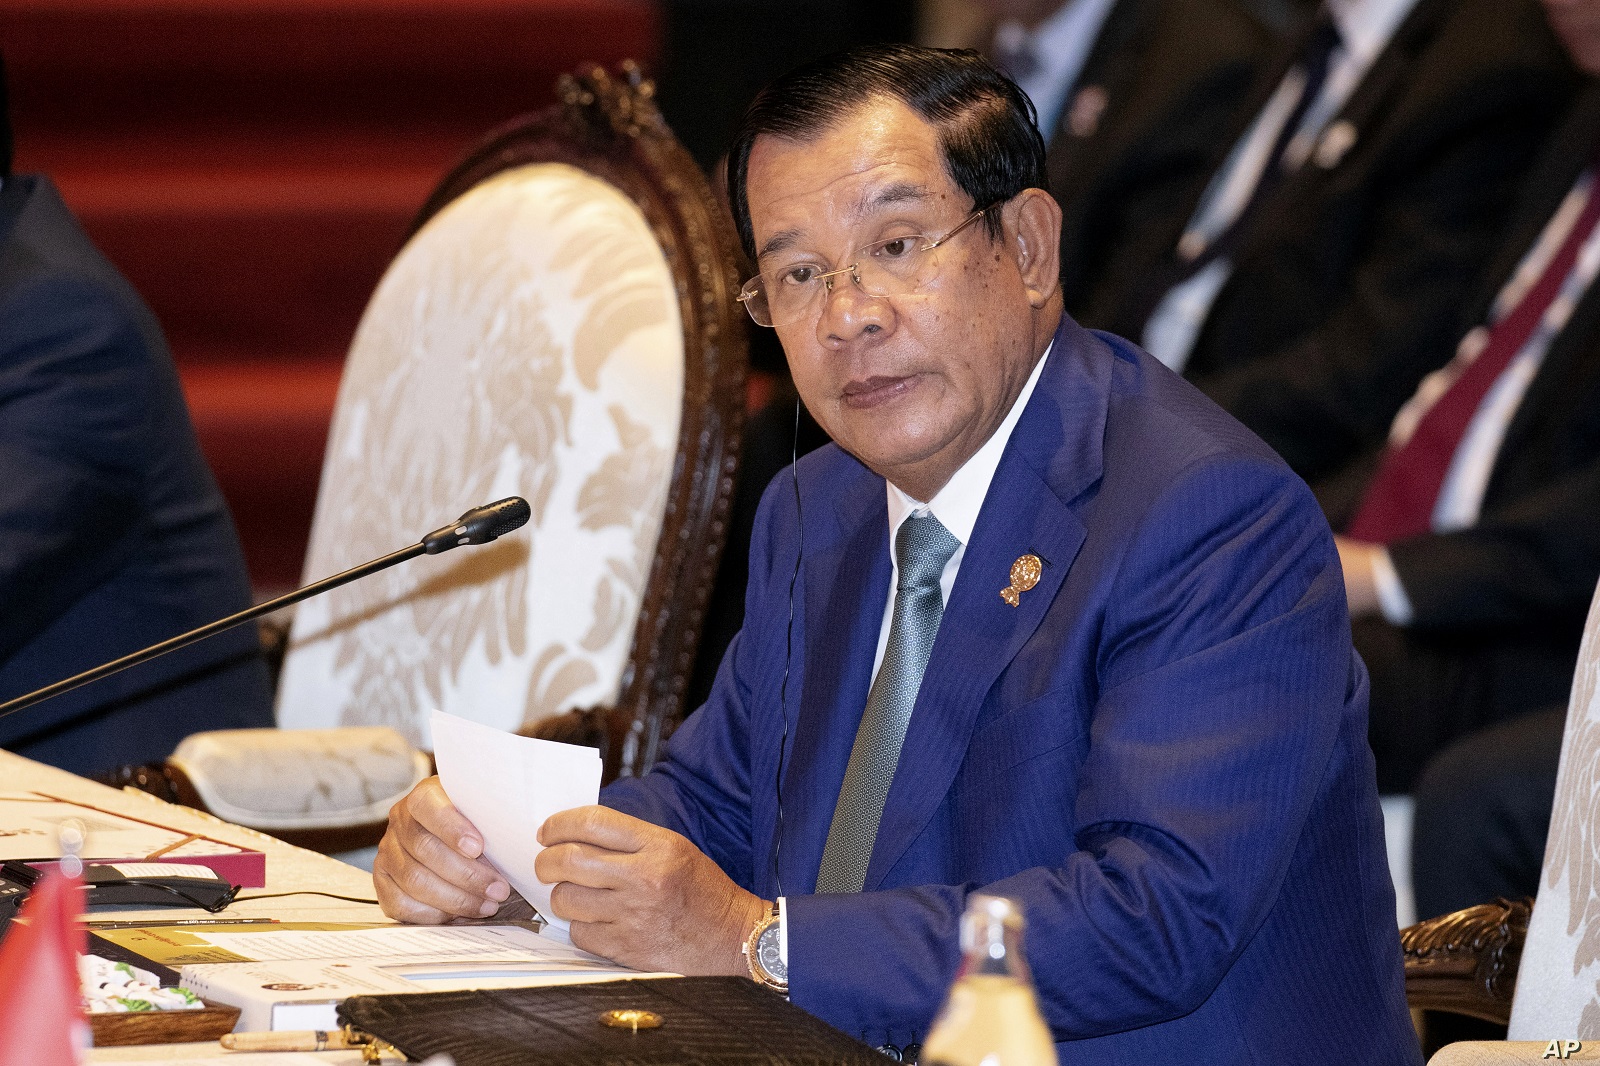 Hun Sen